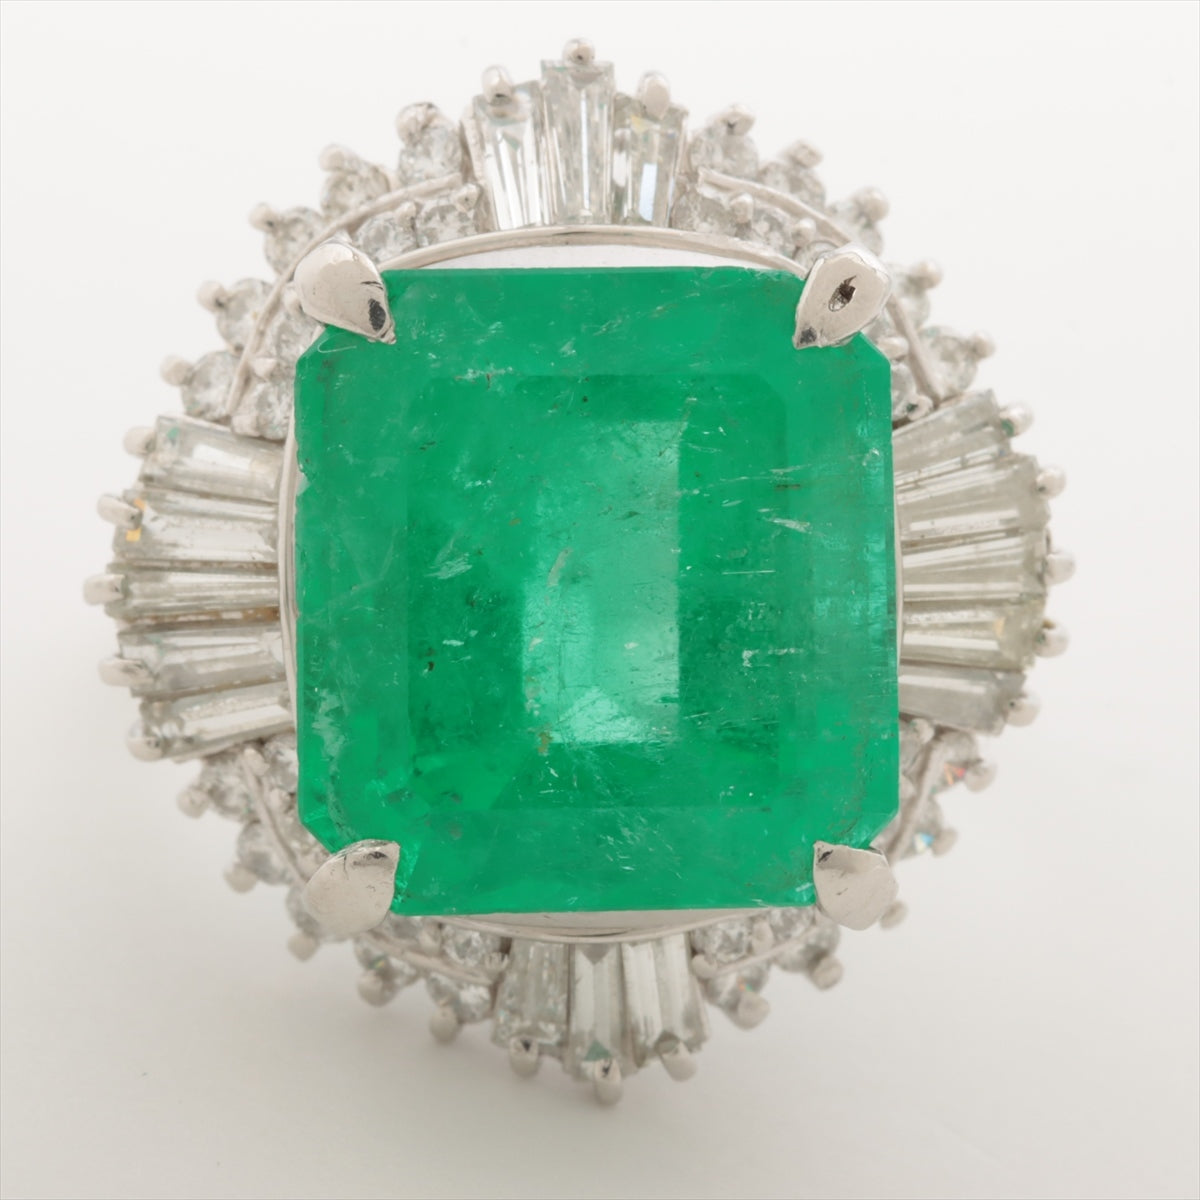 Emerald Diamond Ring Pt900 13.0g 8.97 1.46 N